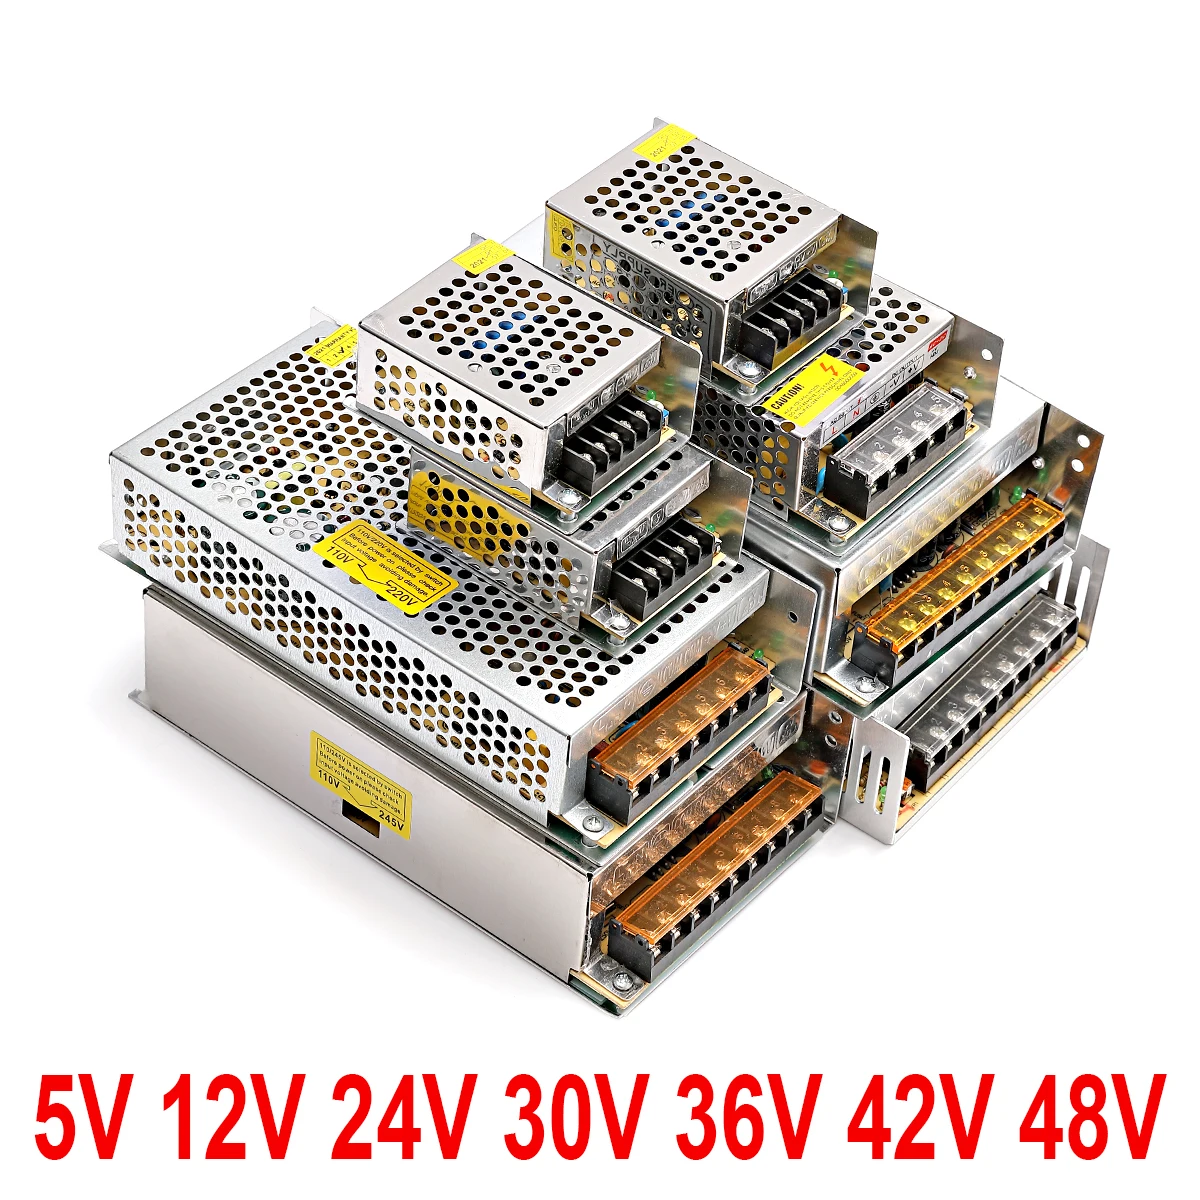 

3V 5V 9V 12V 15V 18V 24V 36V Power Supply 1A 2A 3A 5A 6A 8A 10A 20A 50A Switching Power Supply 12 V Volt 220V to 12V AC-DC SMPS